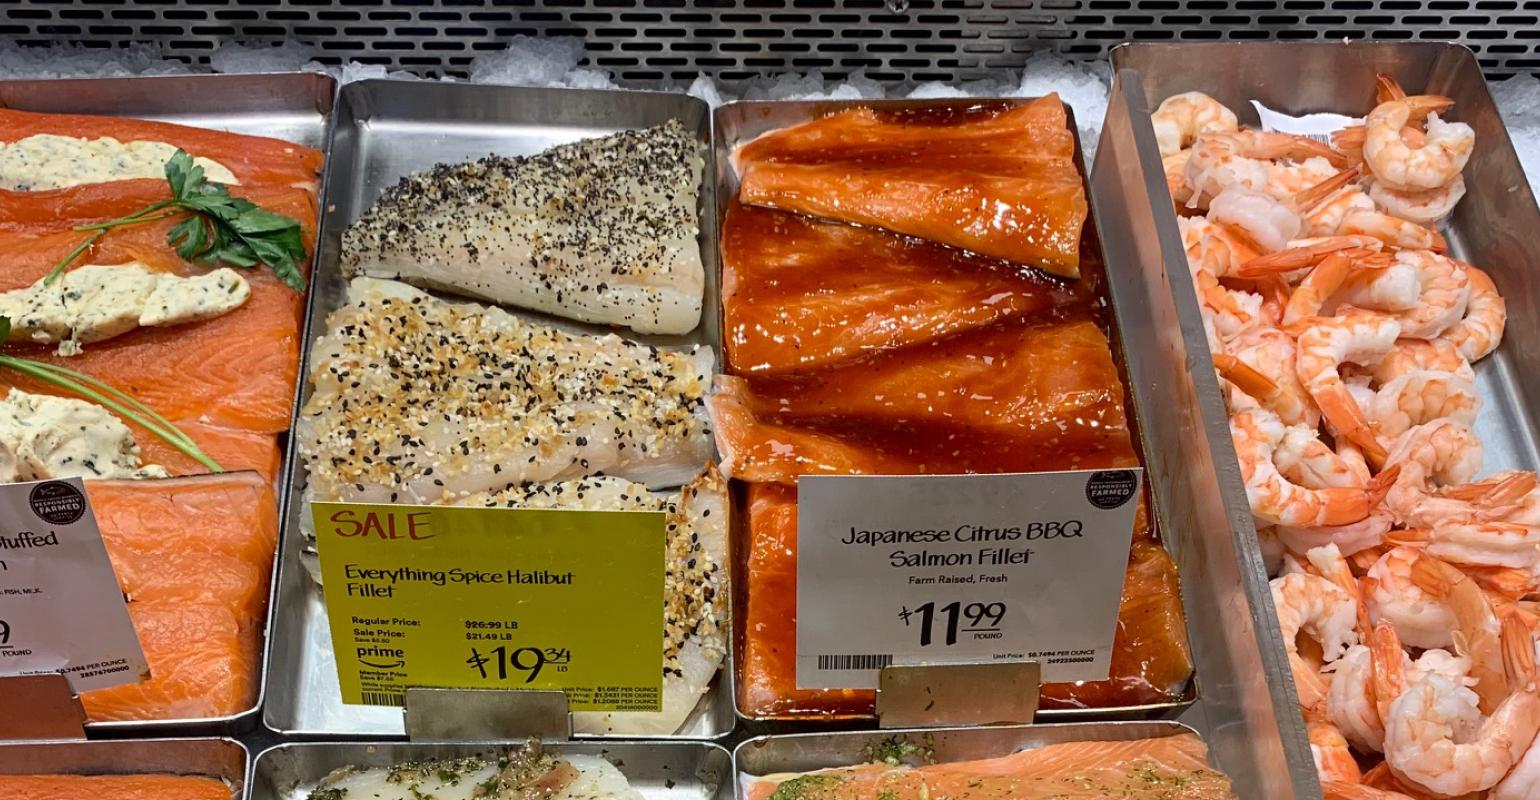 Farm Raised Shrimp Ring at Whole Foods Market